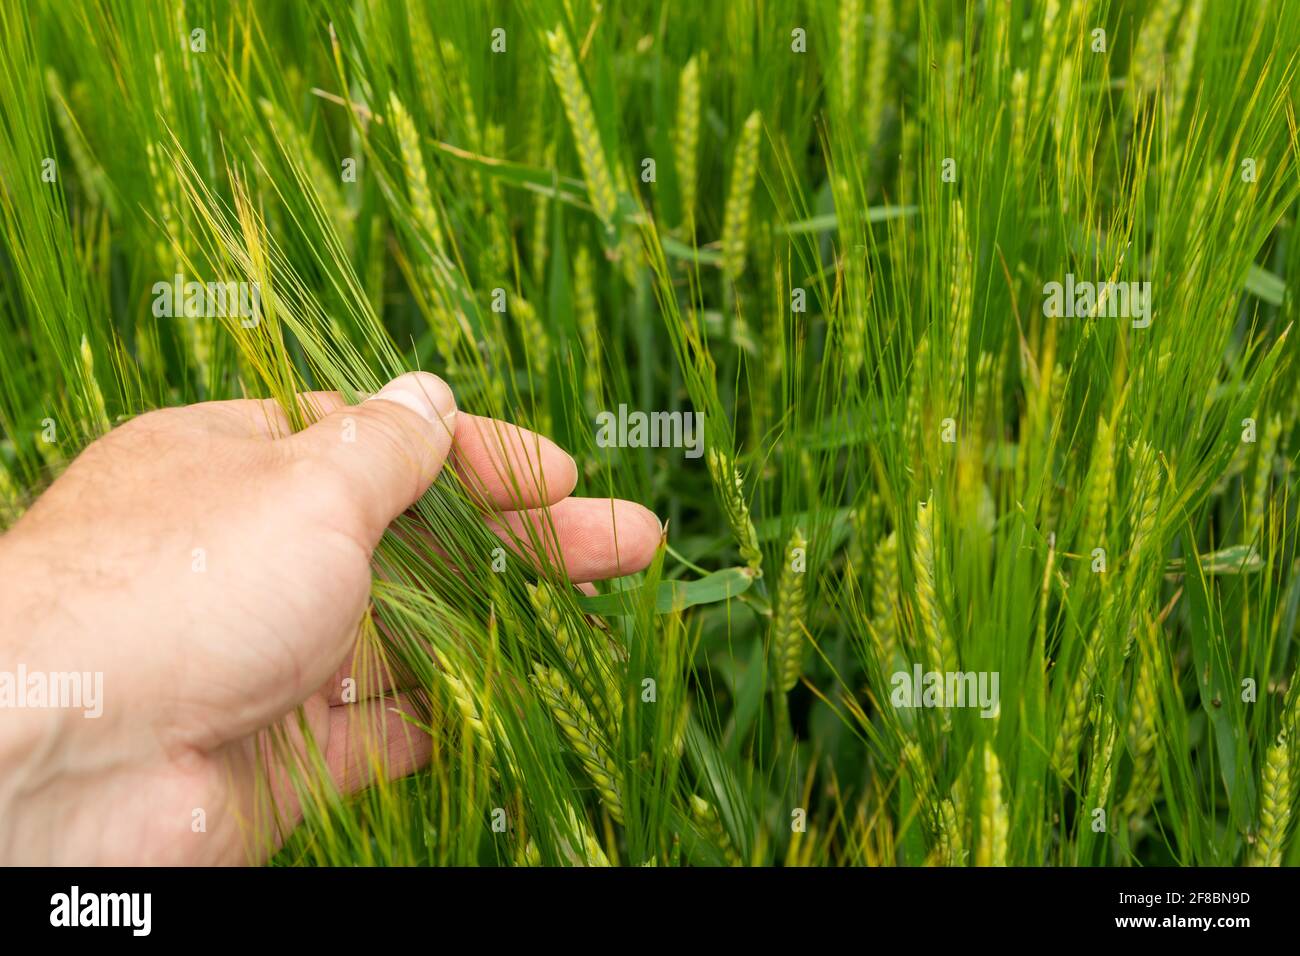 A human hand touching an ear of green grain, spring view Stock Photo